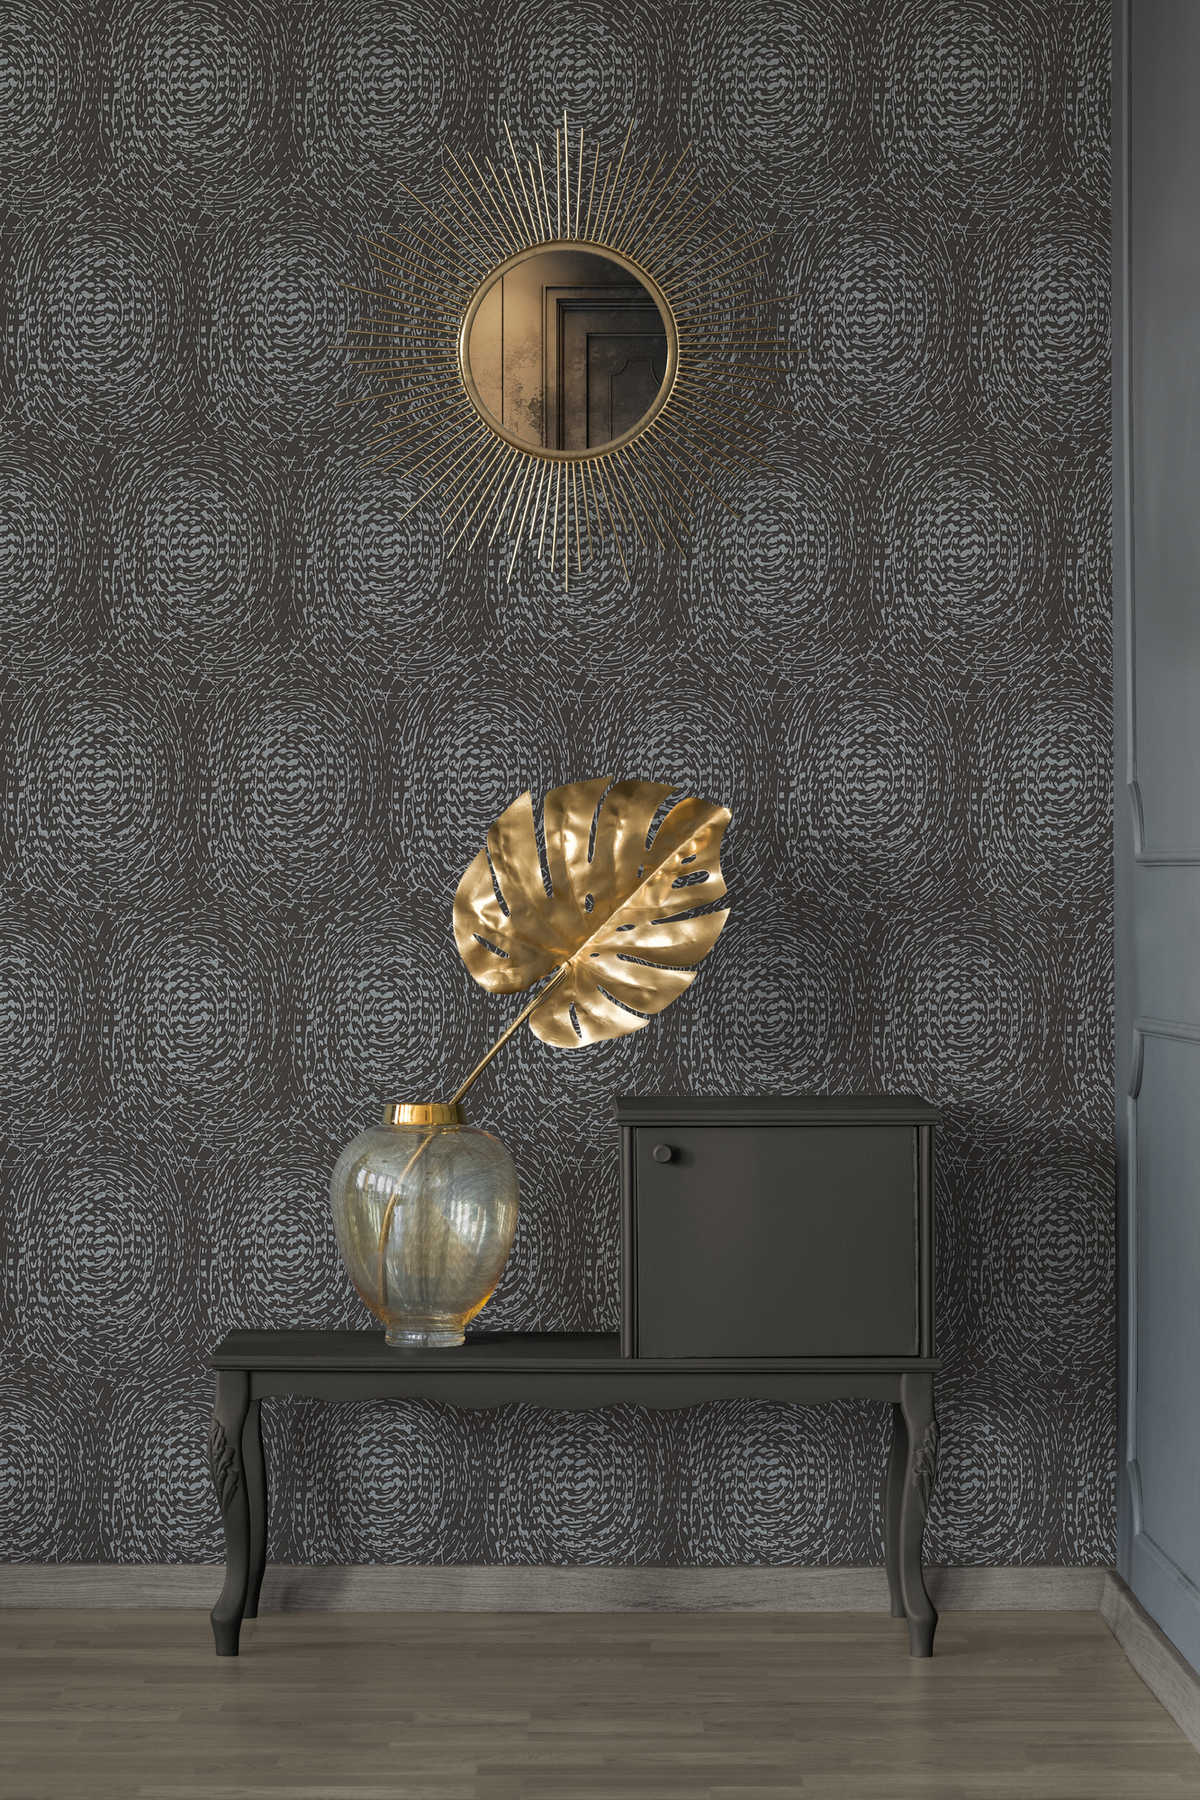             Metallic decor wallpaper in ethnic style - metallic, black
        